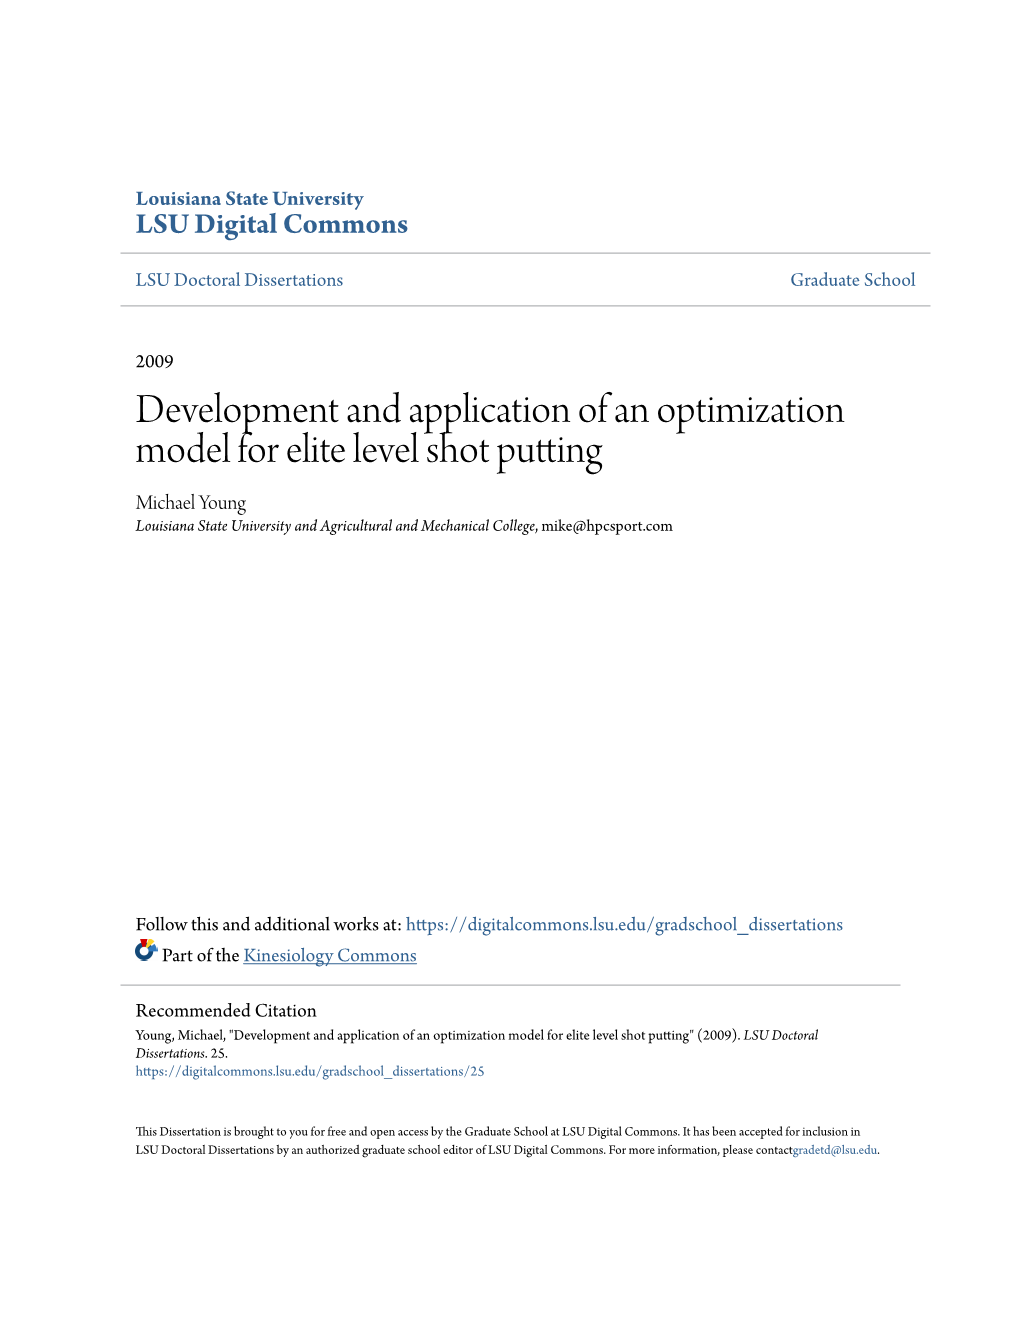 Development and Application of an Optimization Model for Elite Level Shot Putting